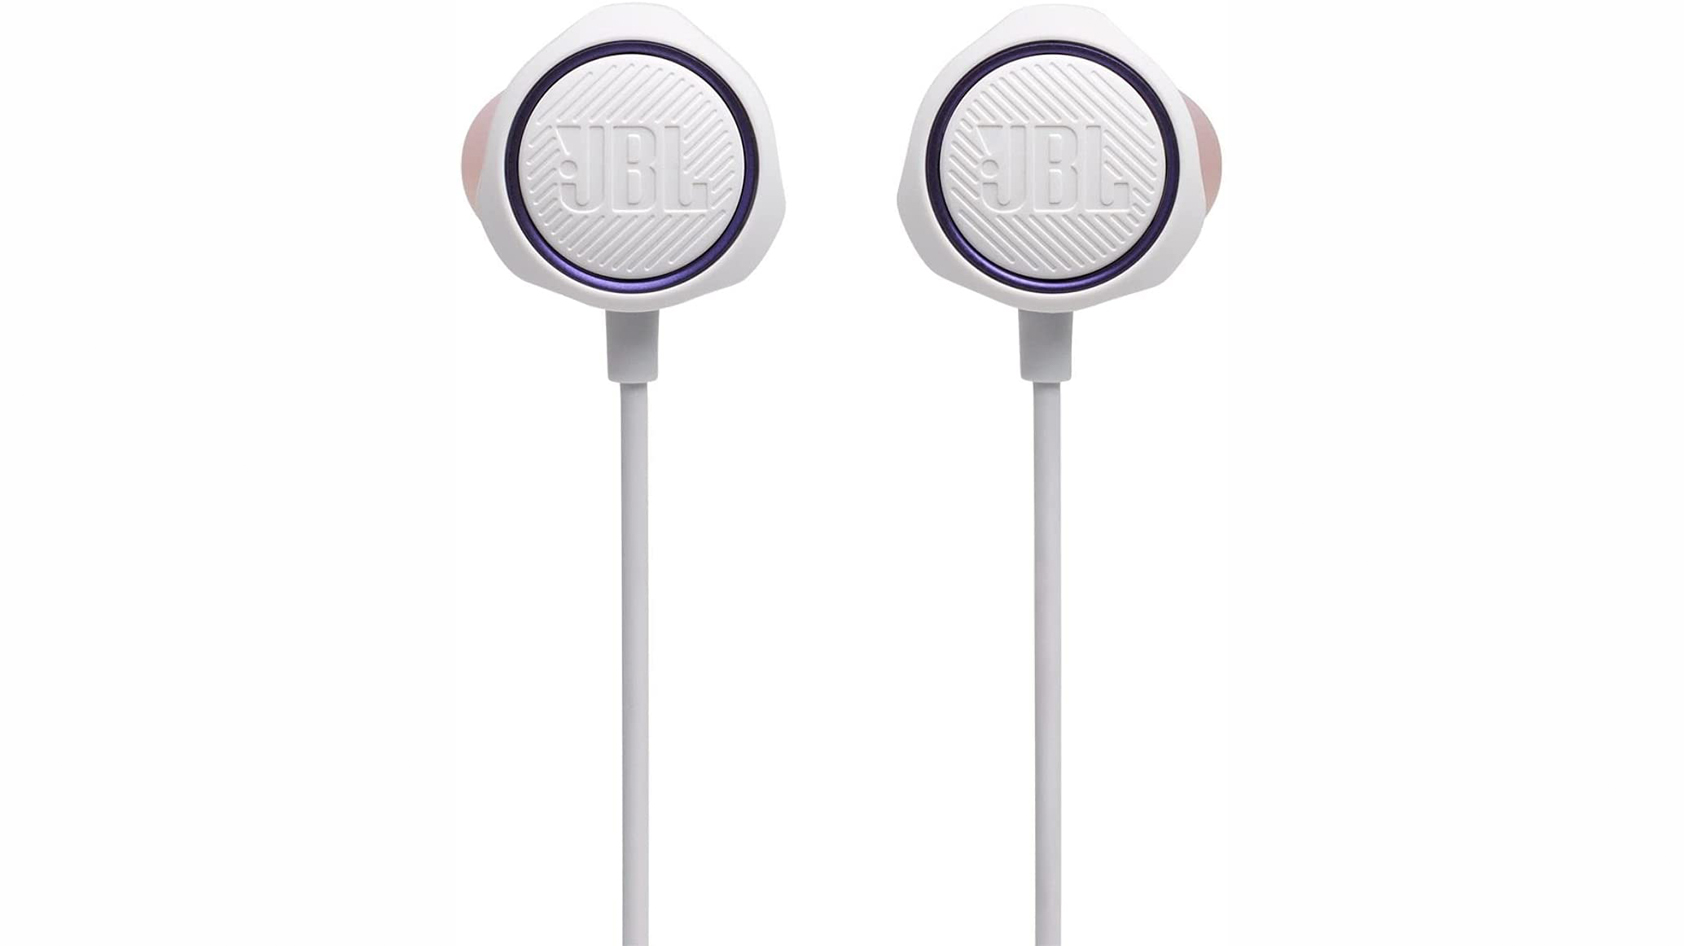 JBL Quantum 50 Wired In-ear Gaming Headset, Black 